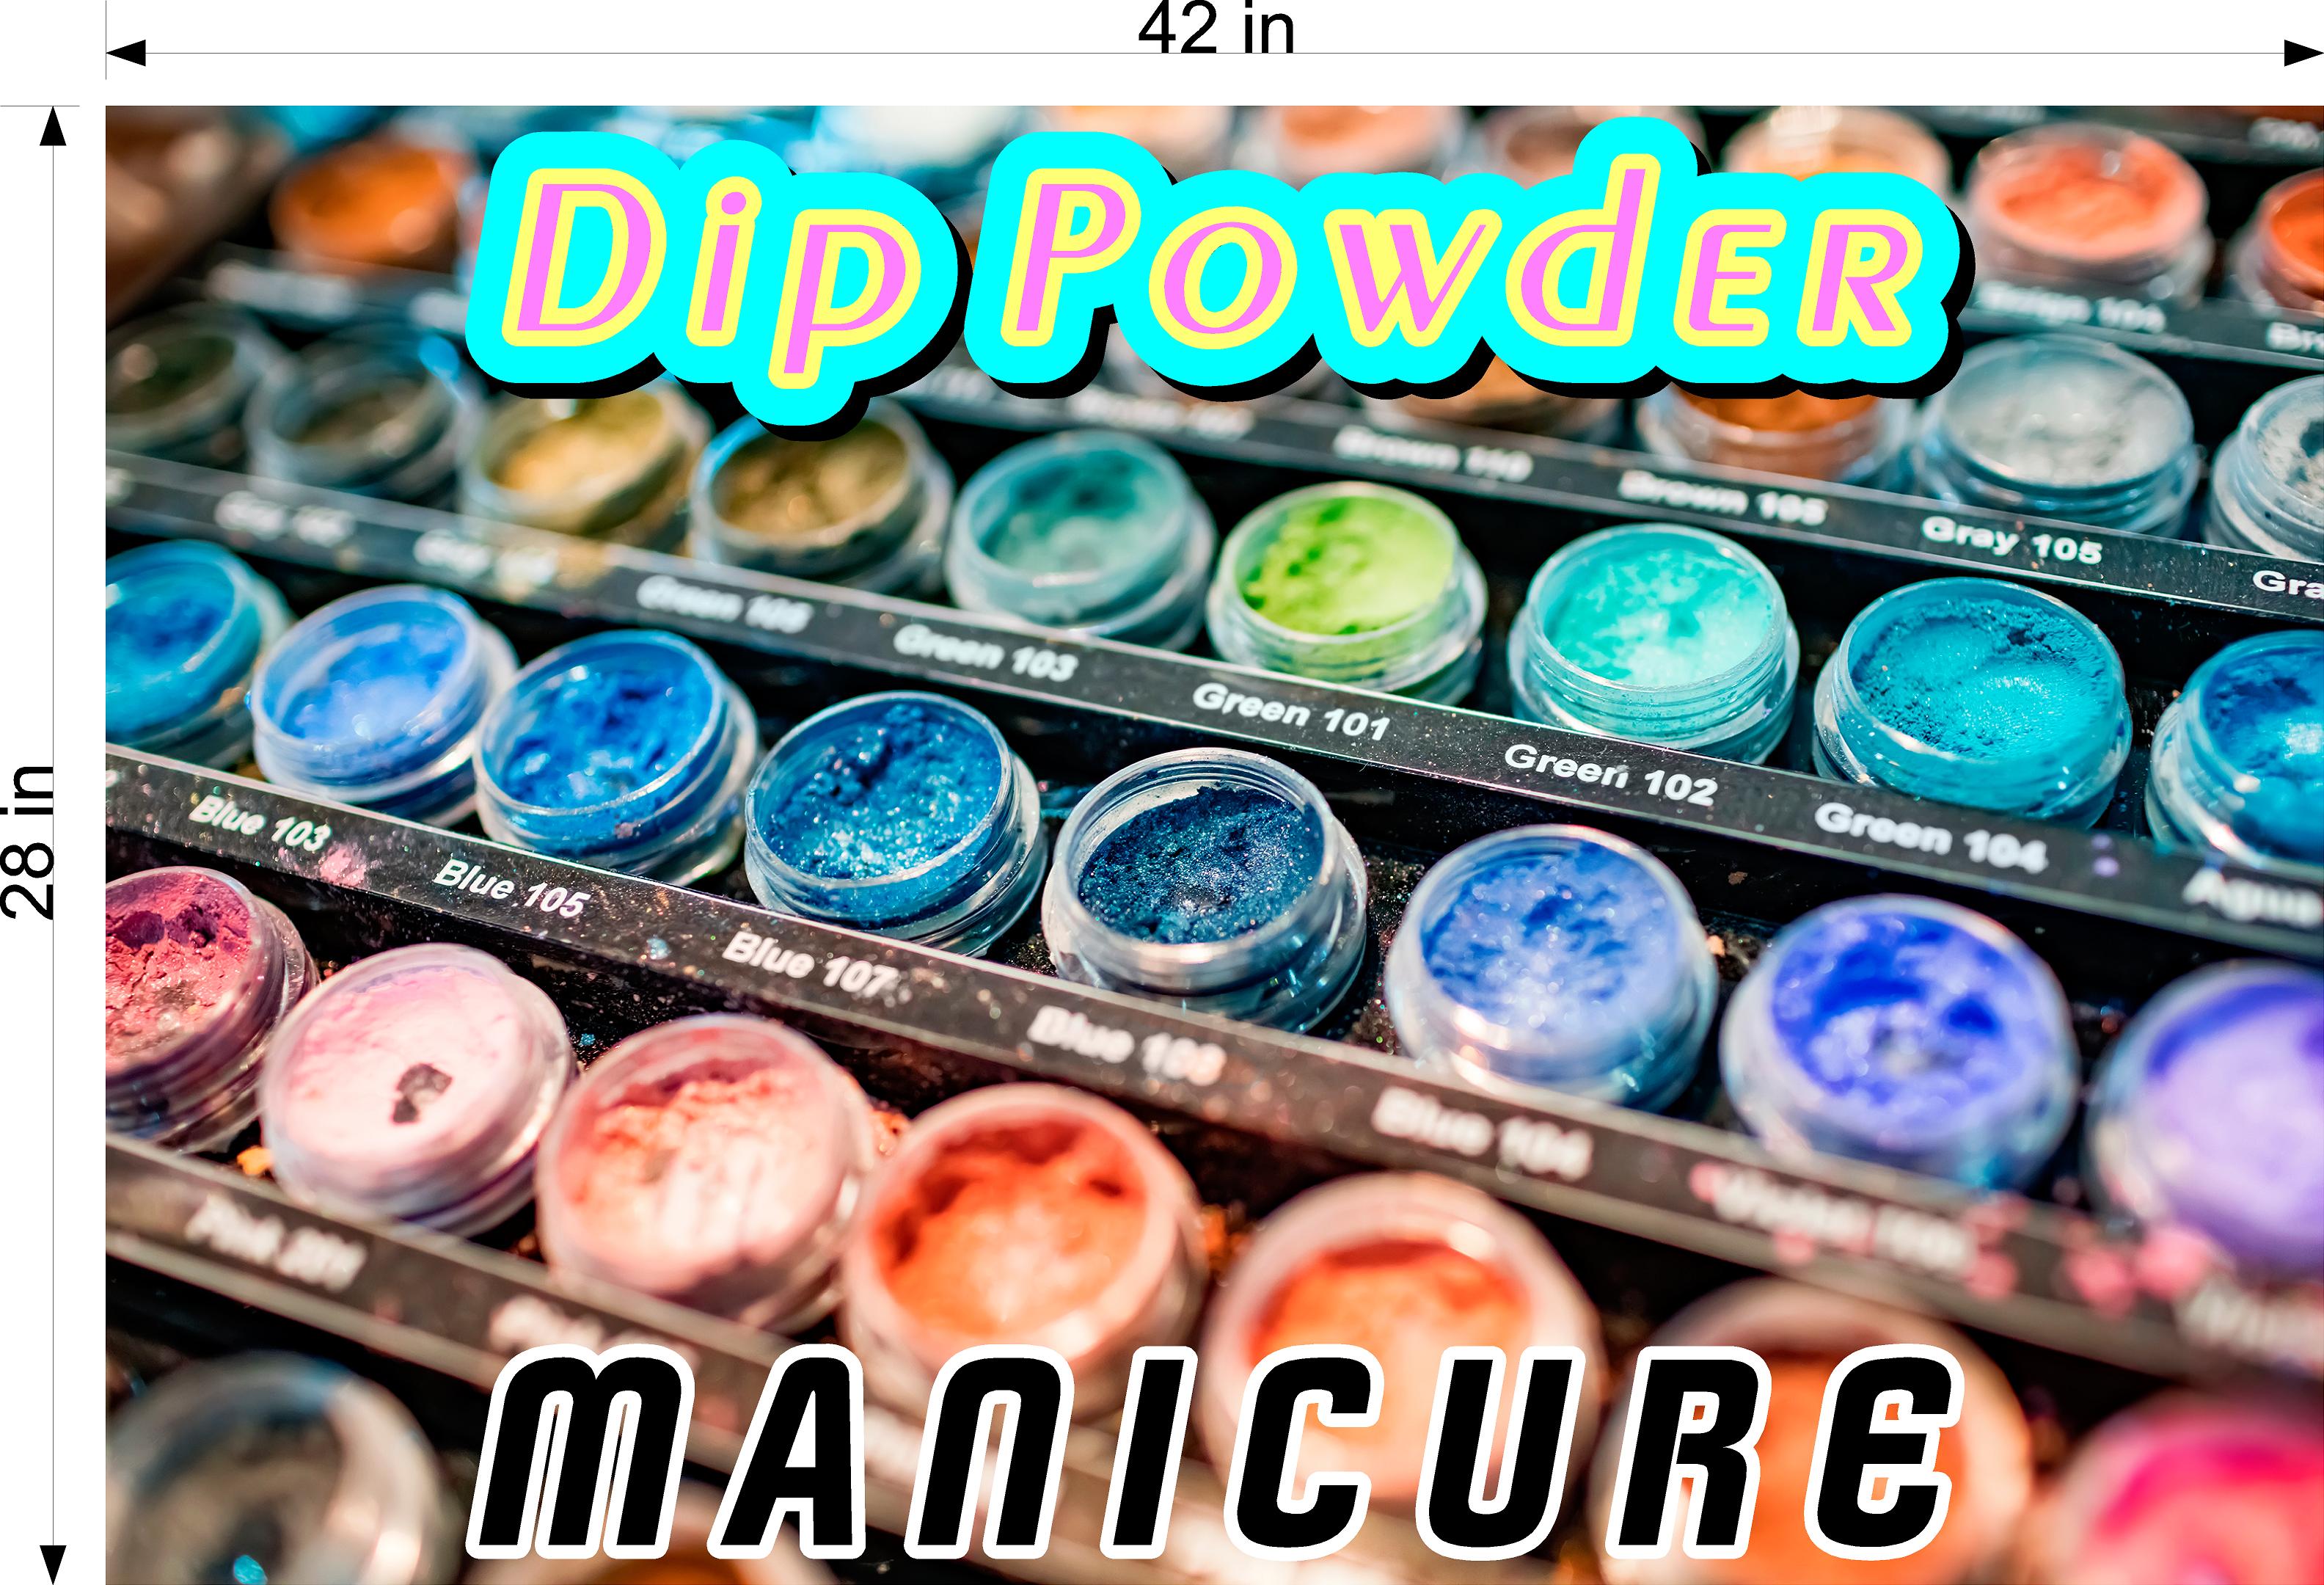 Dip Powder 09 Wallpaper Poster Decal with Adhesive Backing Wall Sticker Decor Nail Salon Sign Horizontal